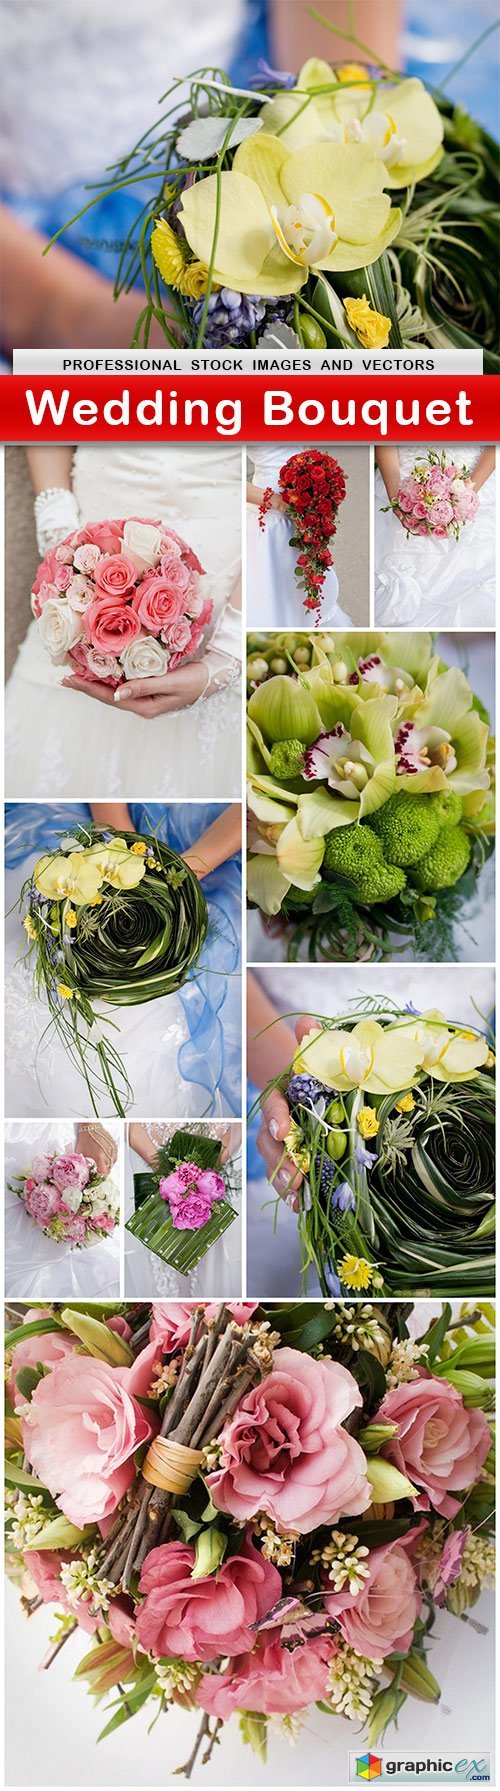 Wedding Bouquet - 10 UHQ JPEG